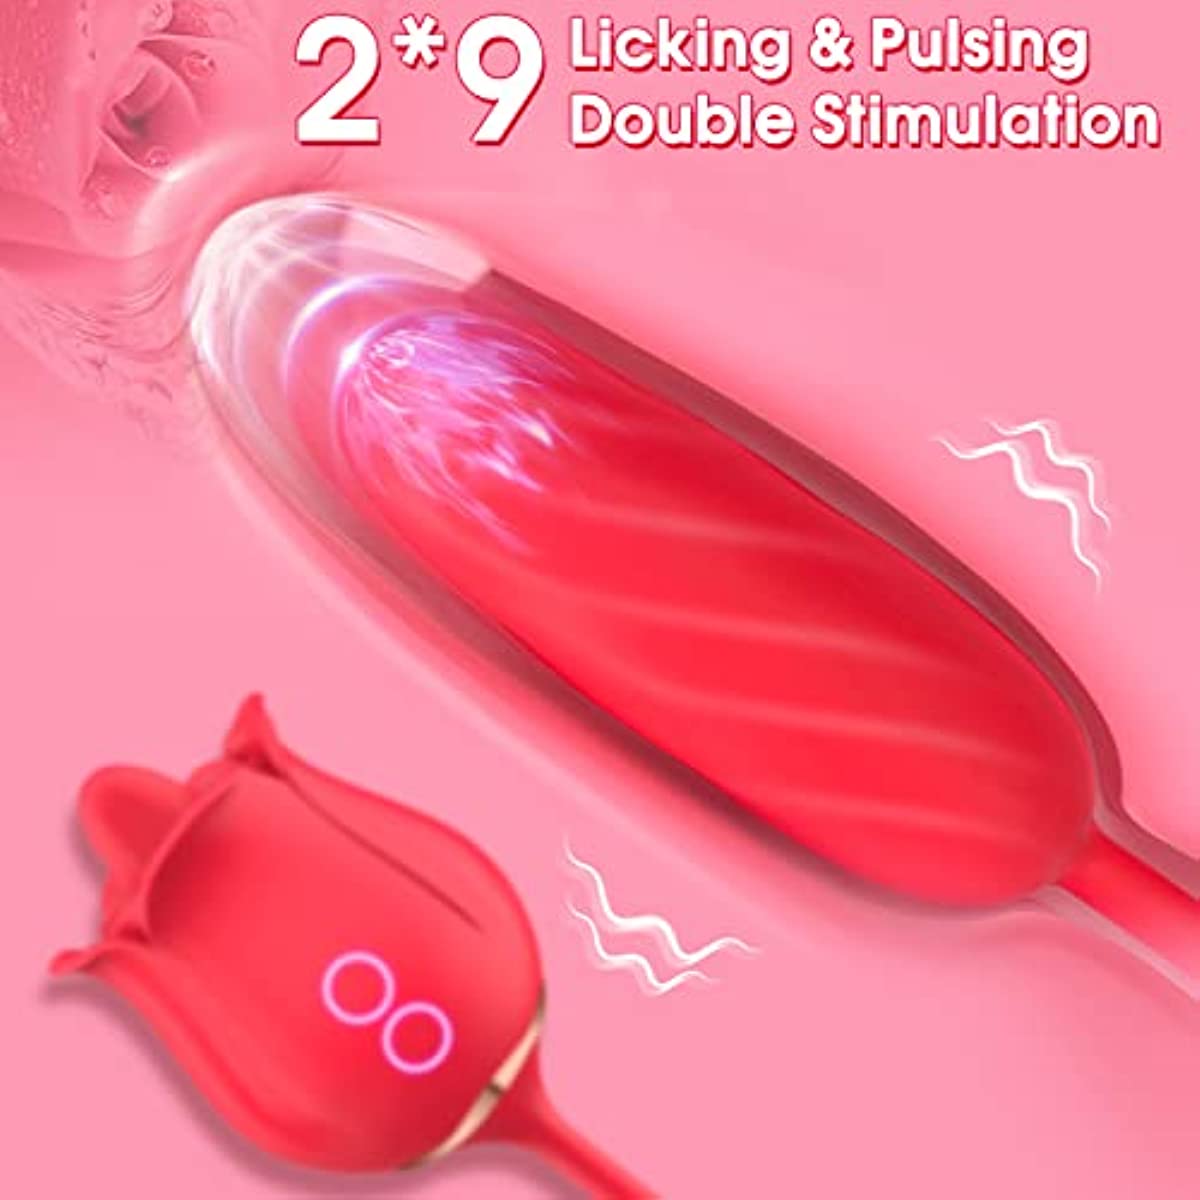 clitoral Vibrator with Pulsating Dildo